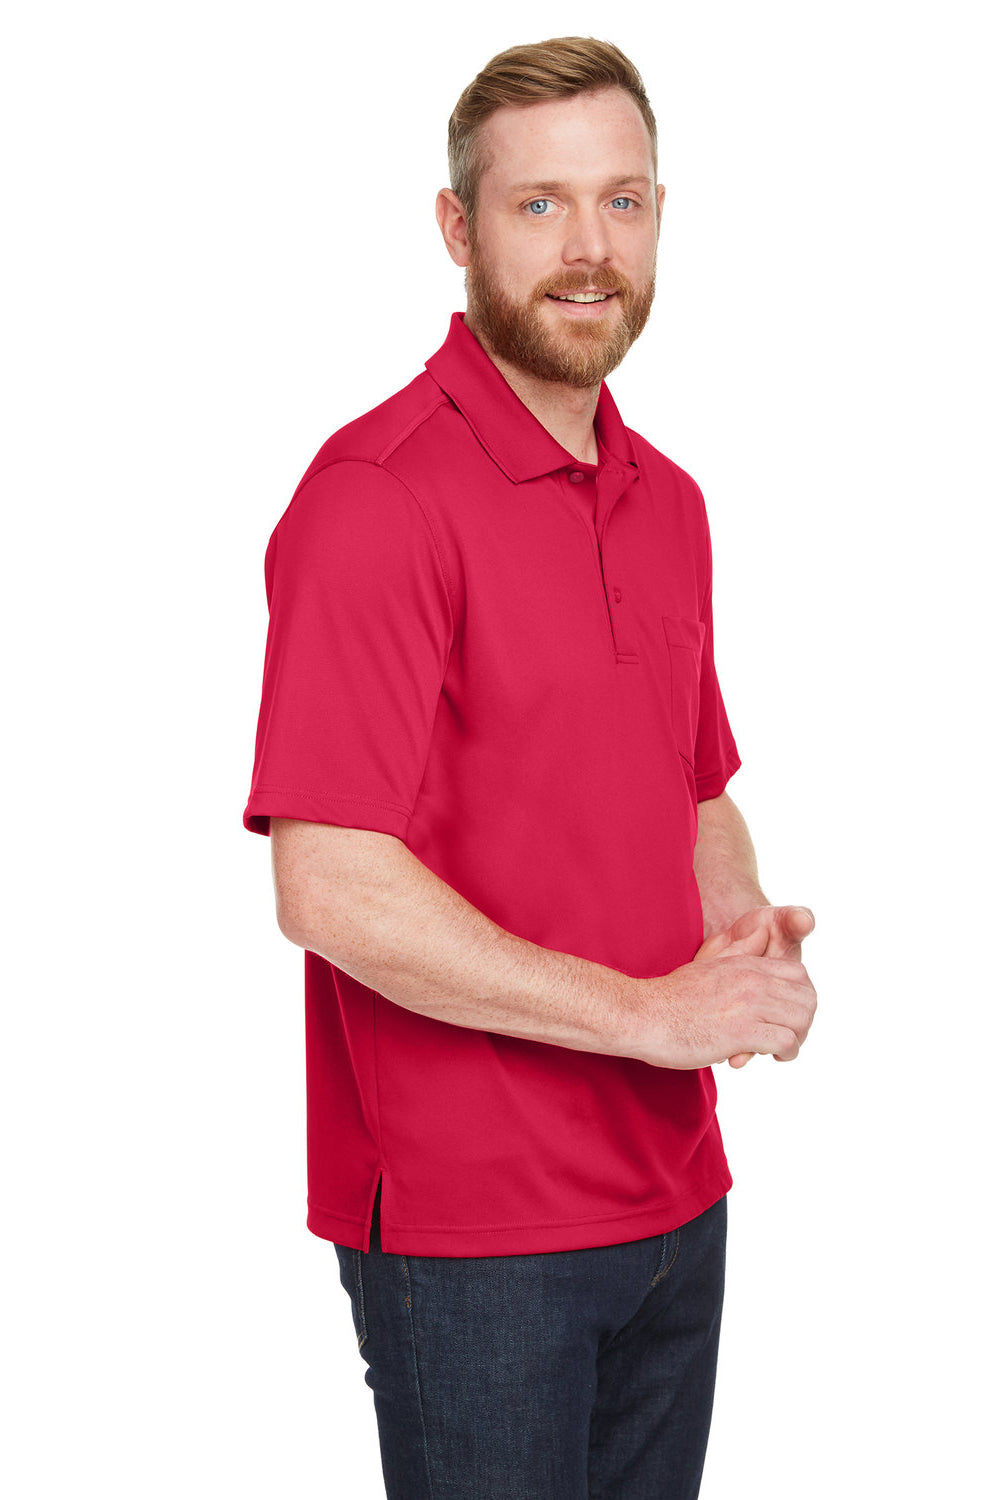 Harriton M348P Mens Advantage Performance Moisture Wicking Short Sleeve Polo Shirt w/ Pocket Red 3Q